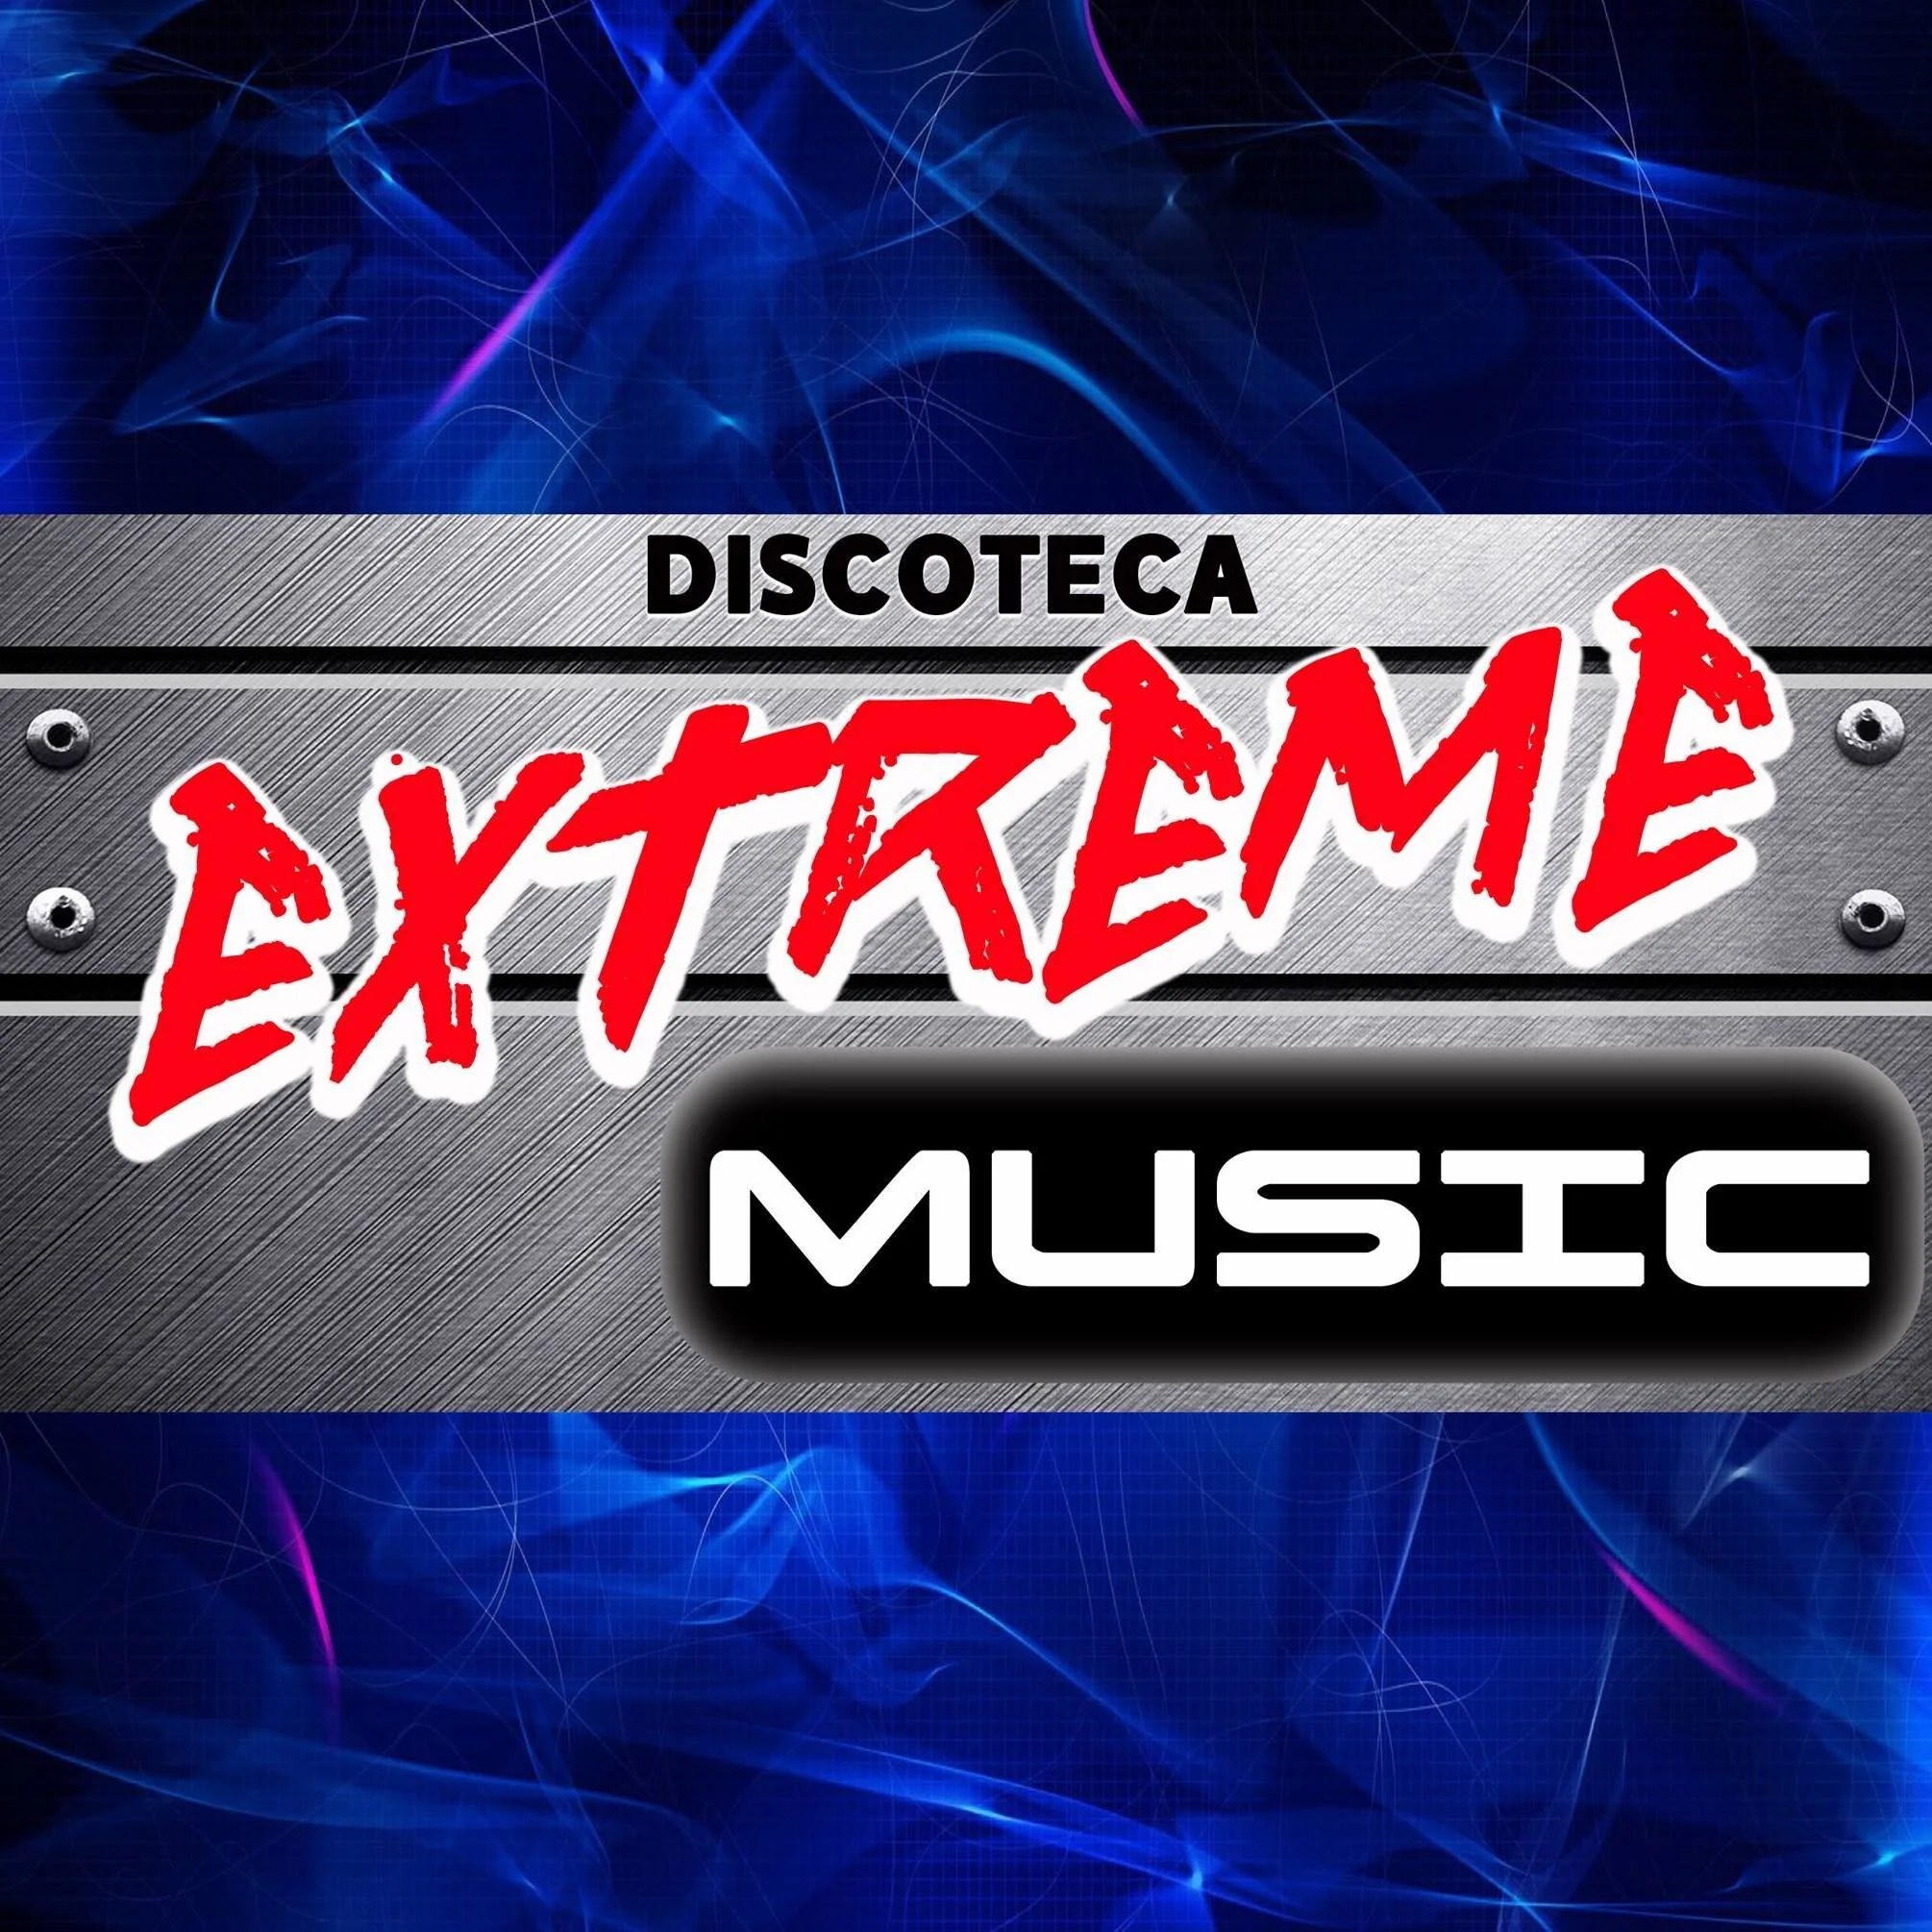 Extreme Music Discoteca-9721